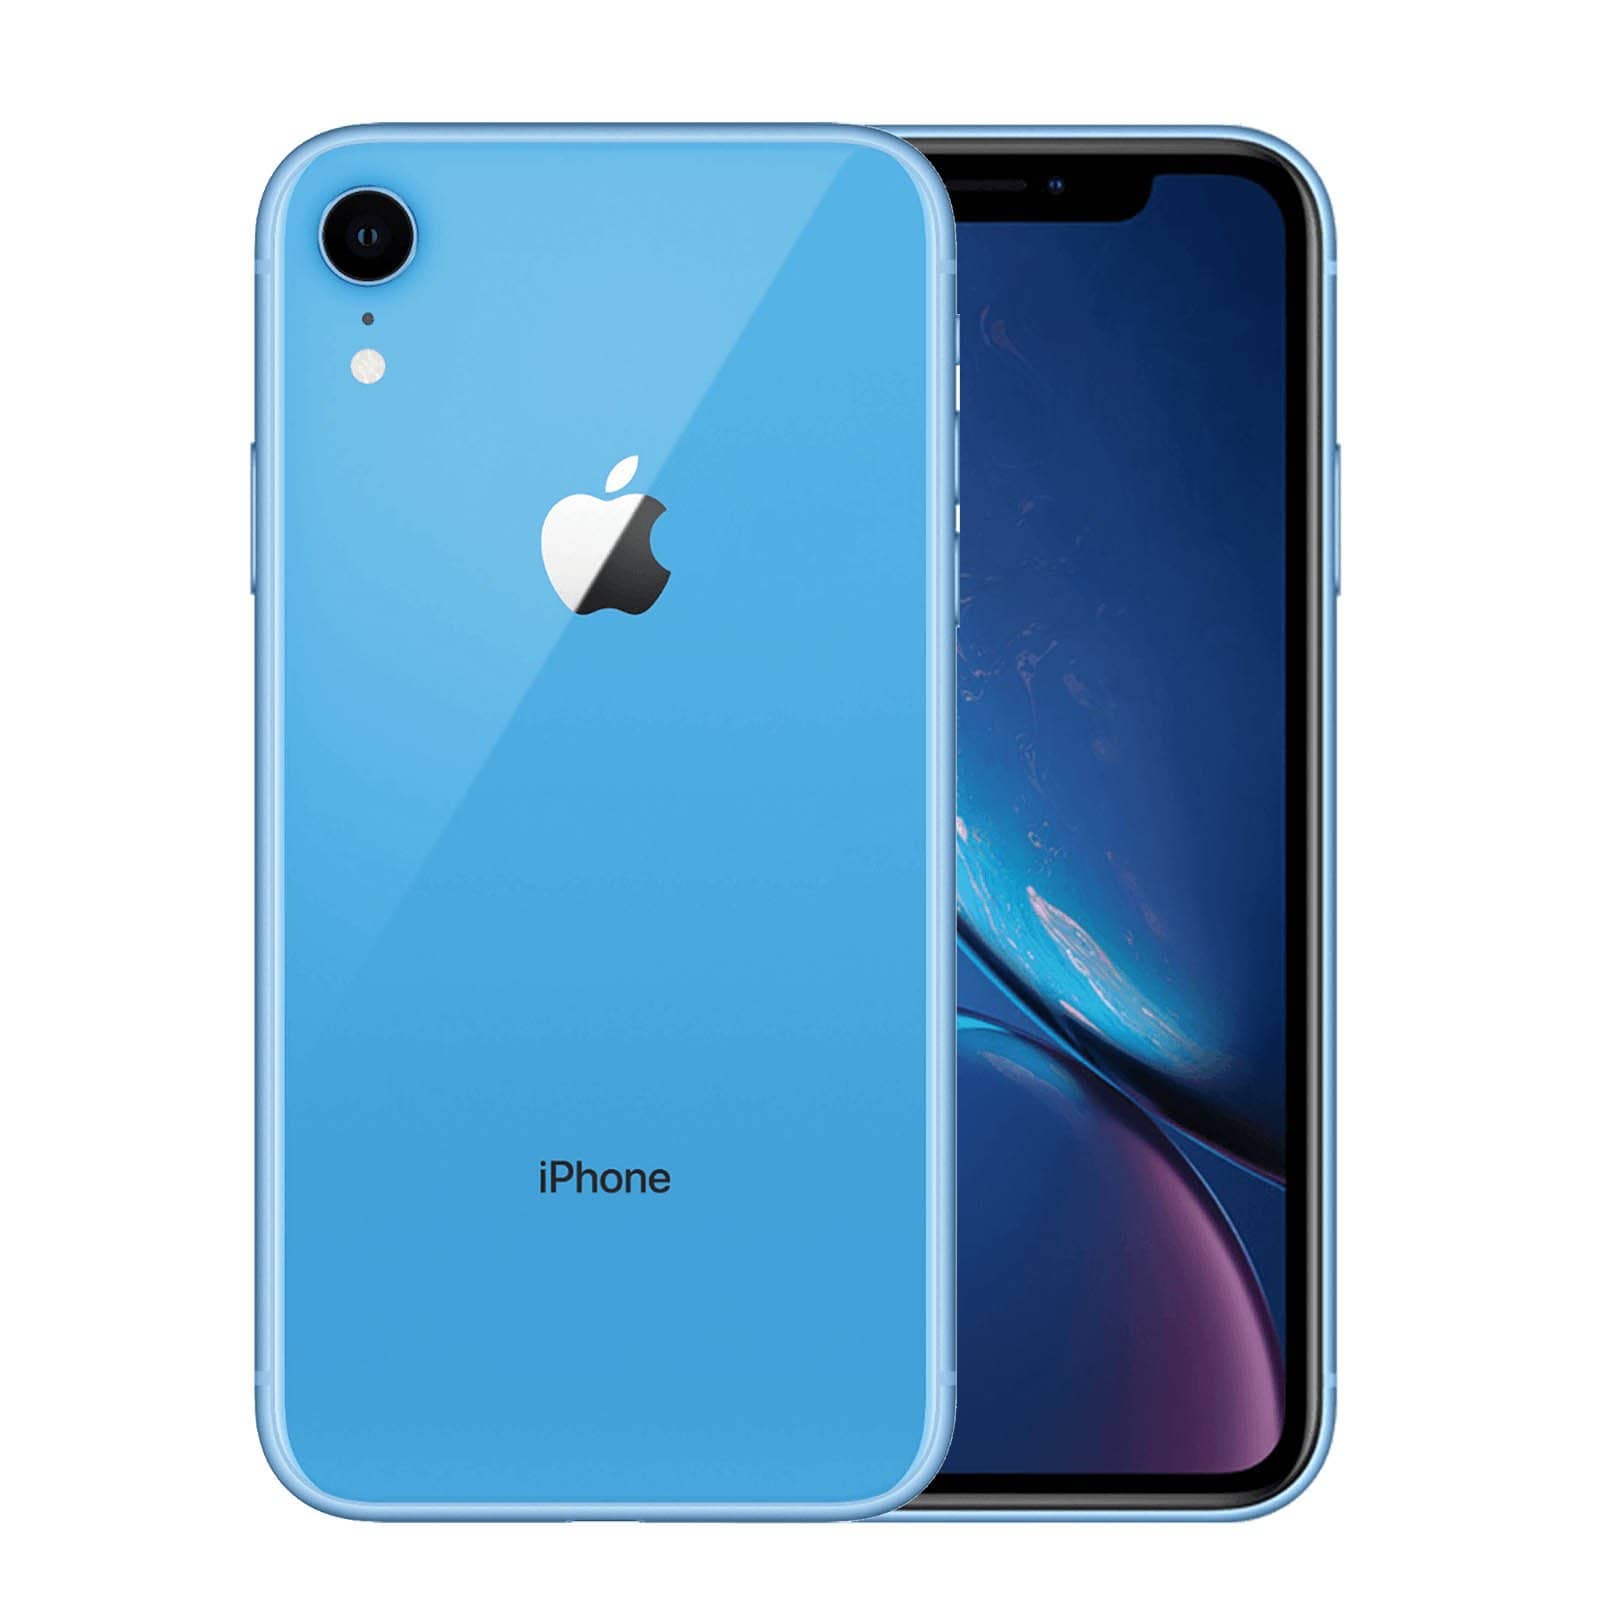 Apple iPhone XR 256GB Blue Very Good - Unlocked 256GB Blue Very Good